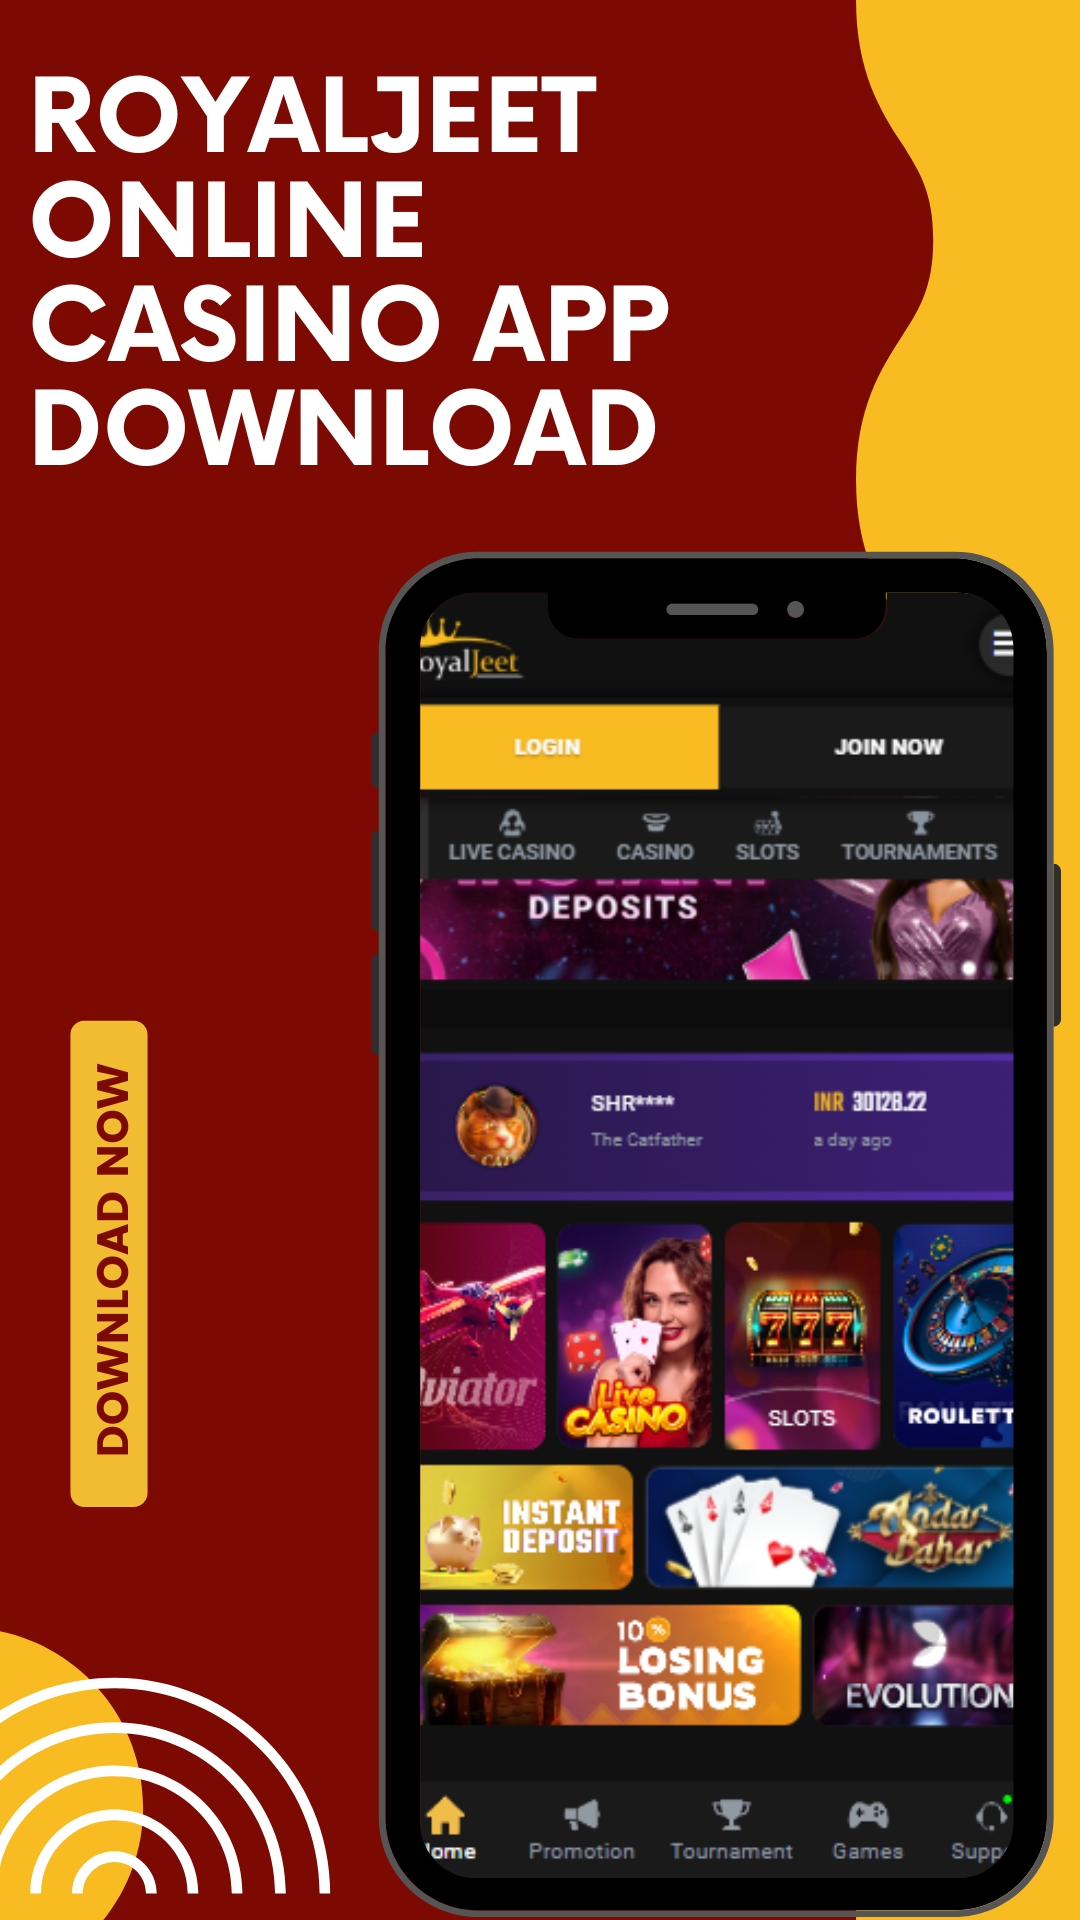 RoyalJeet Casino App Download - Karnataka - Bangalore ID1549486